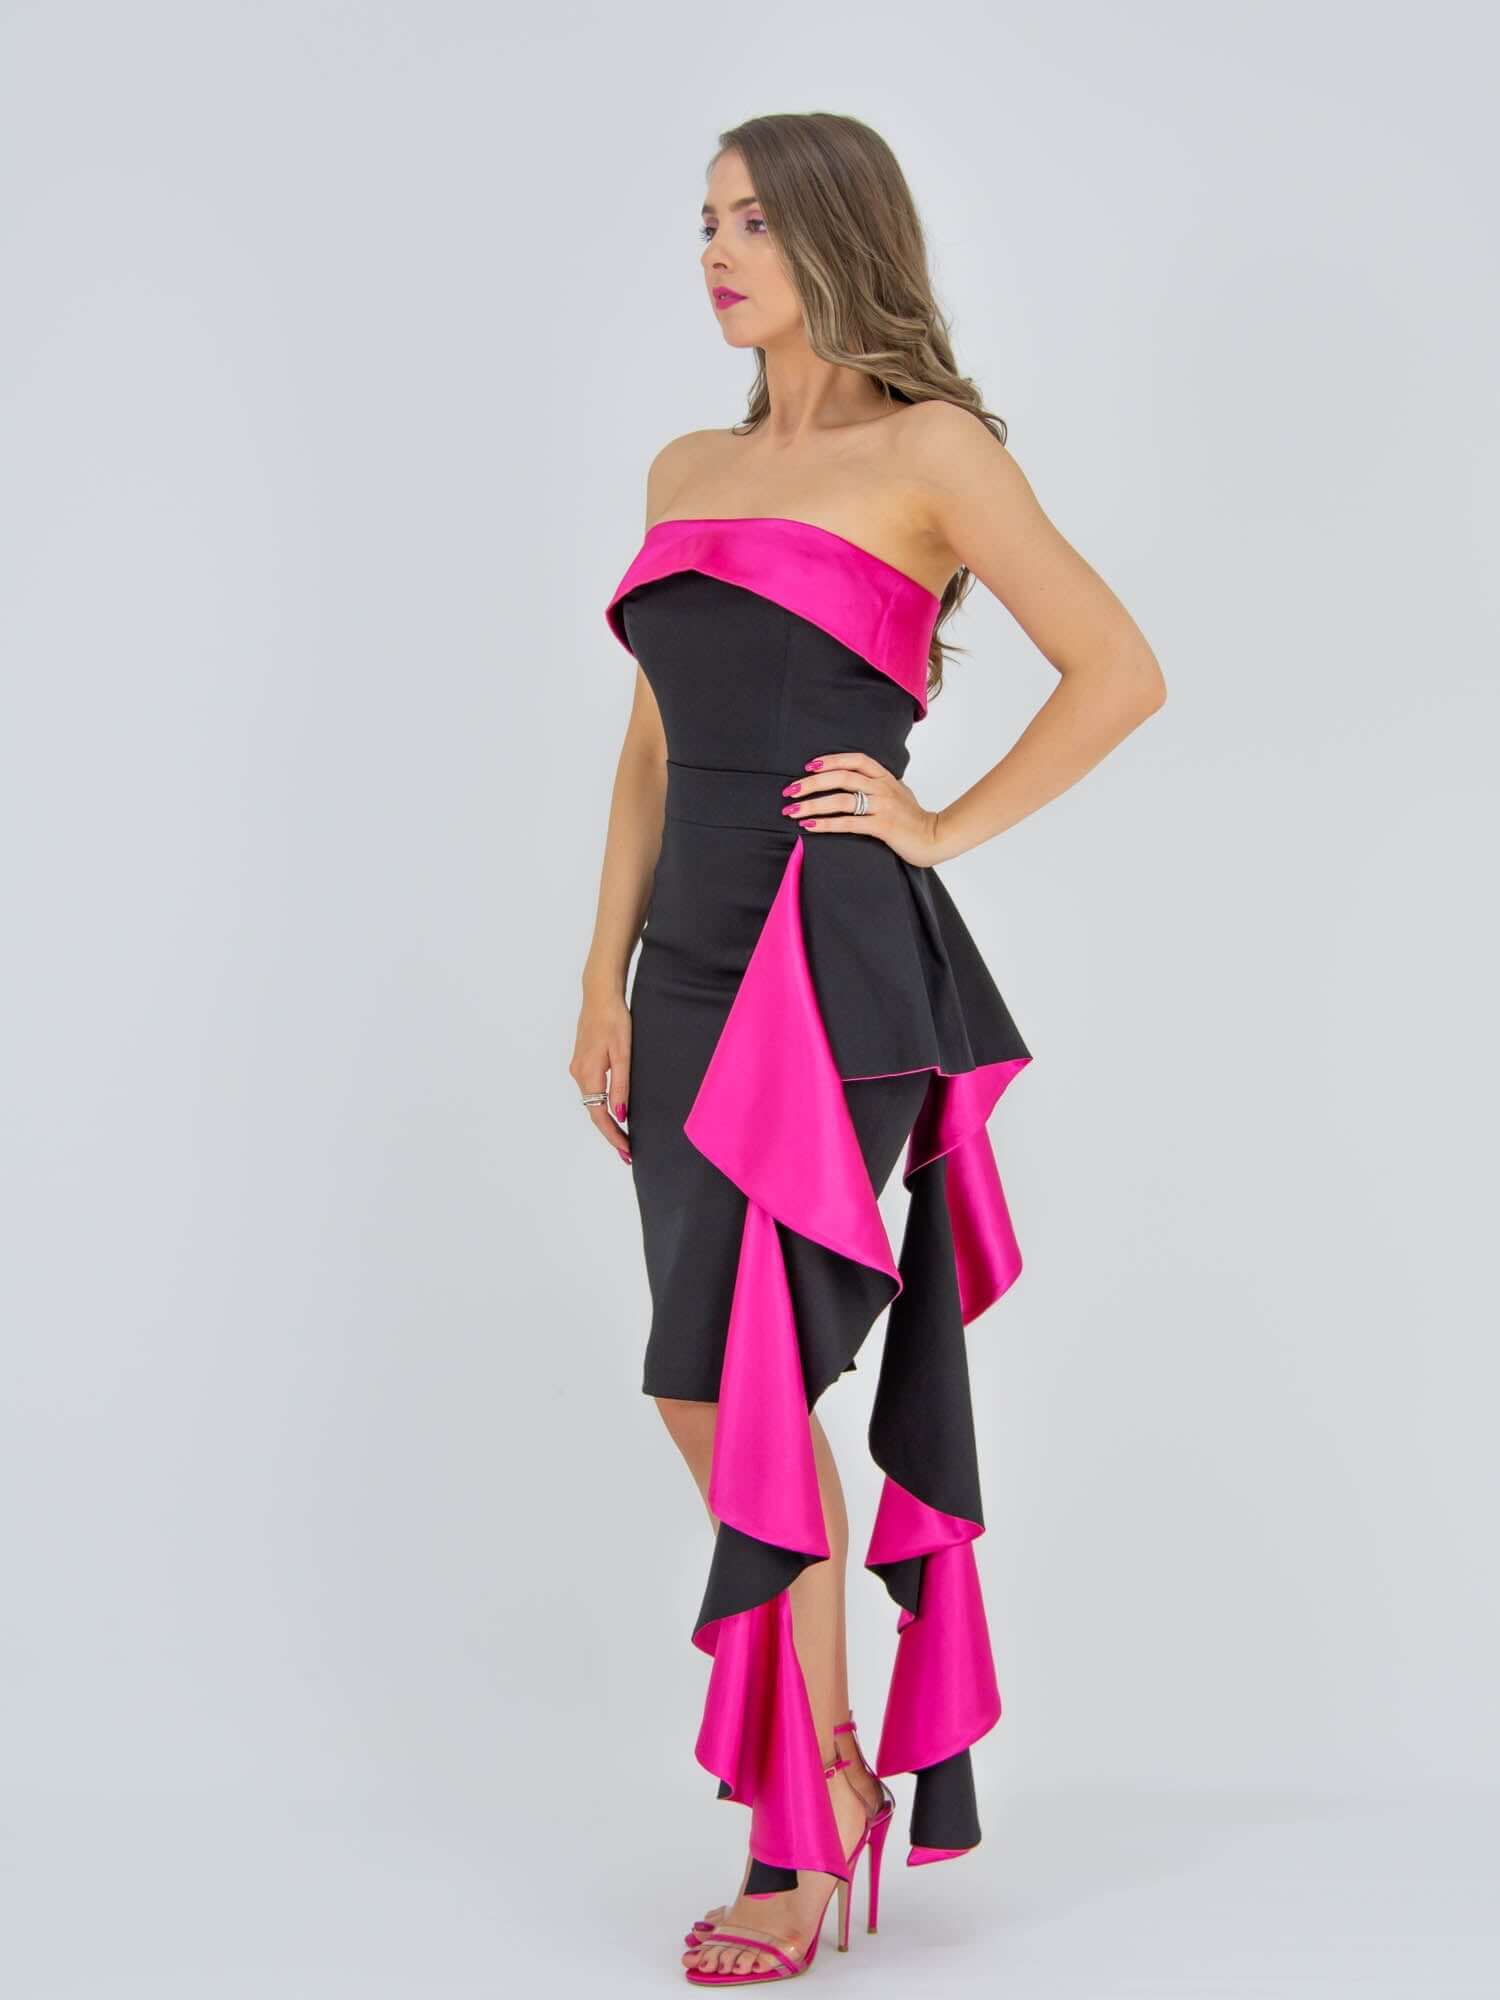 More is More Bodycon Midi Dress - Black by Tia Dorraine Women's Luxury Fashion Designer Clothing Brand